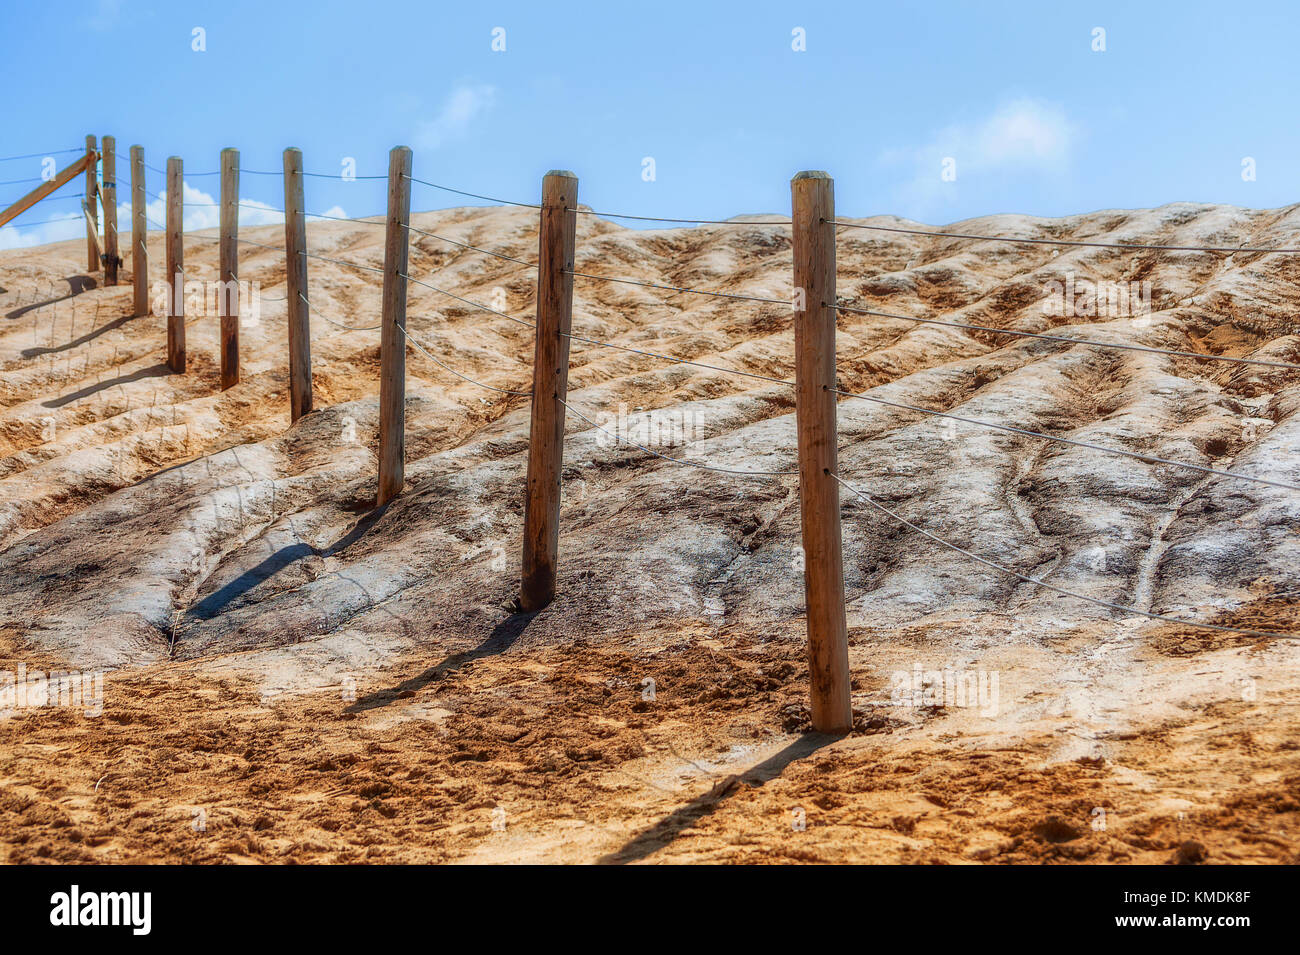 Cape Kiwanda safety boundary fence stretches upward seemingly towards the sky in the minimalist image Stock Photo